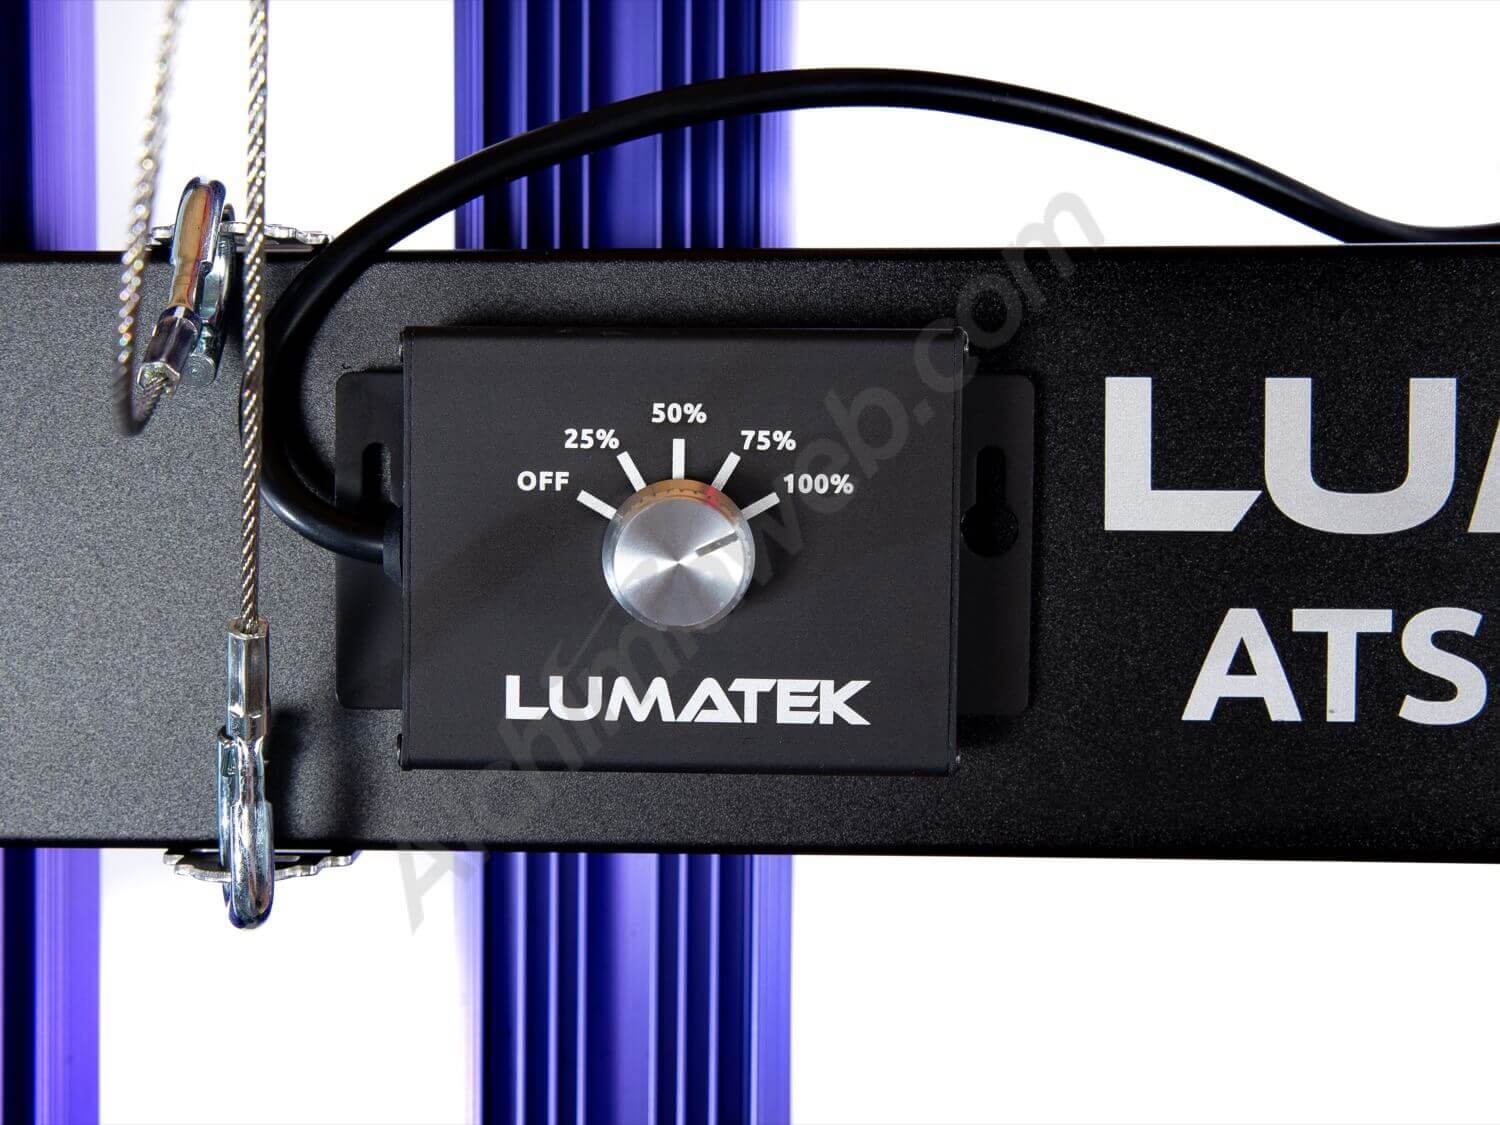 Sale of Lumatek ATS Pro 300w and 200w